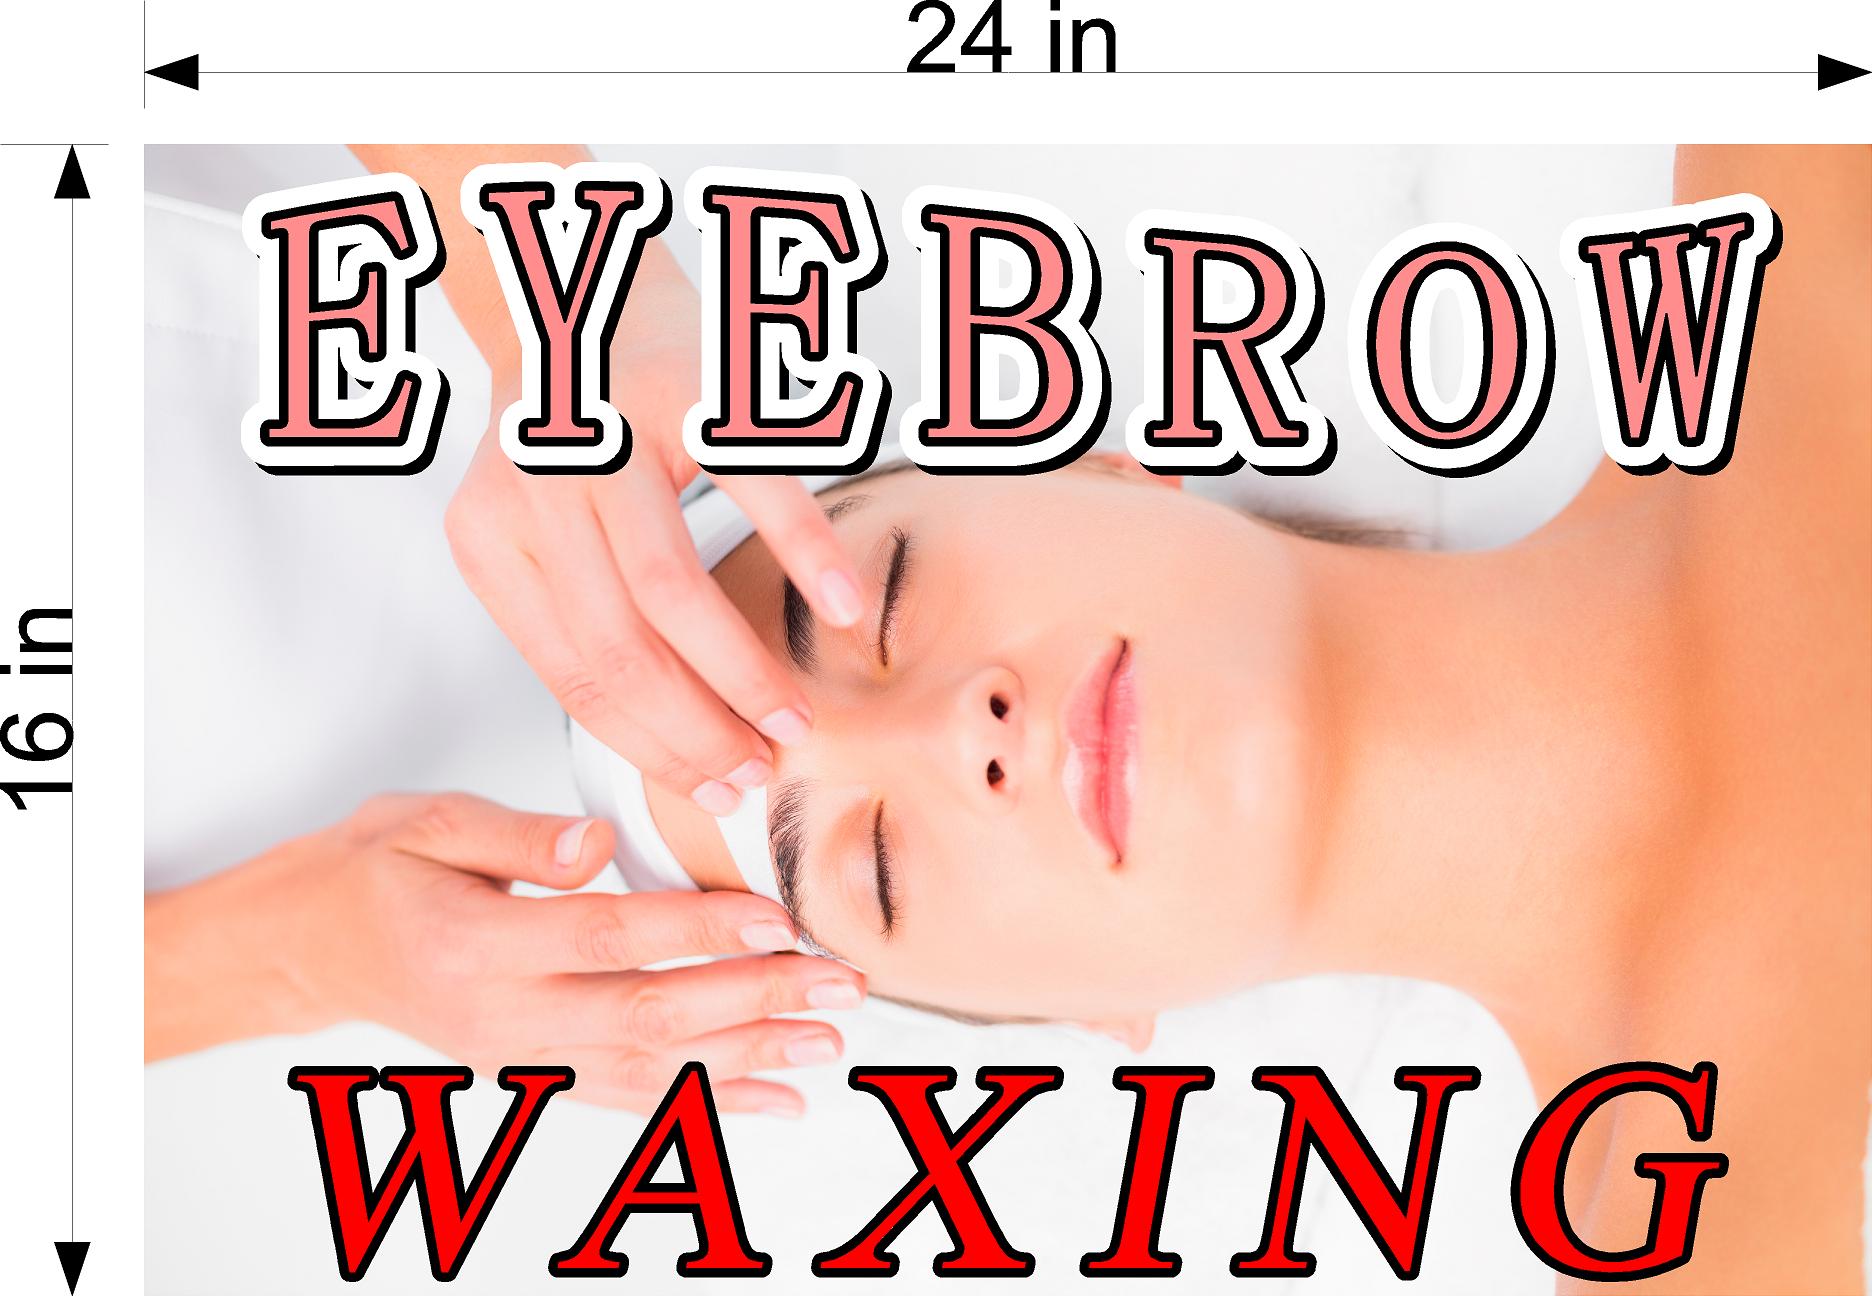 Eyebrows 09 Perforated Mesh One Way Vision See-Through Window Vinyl Salon Sign Waxing Horizontal